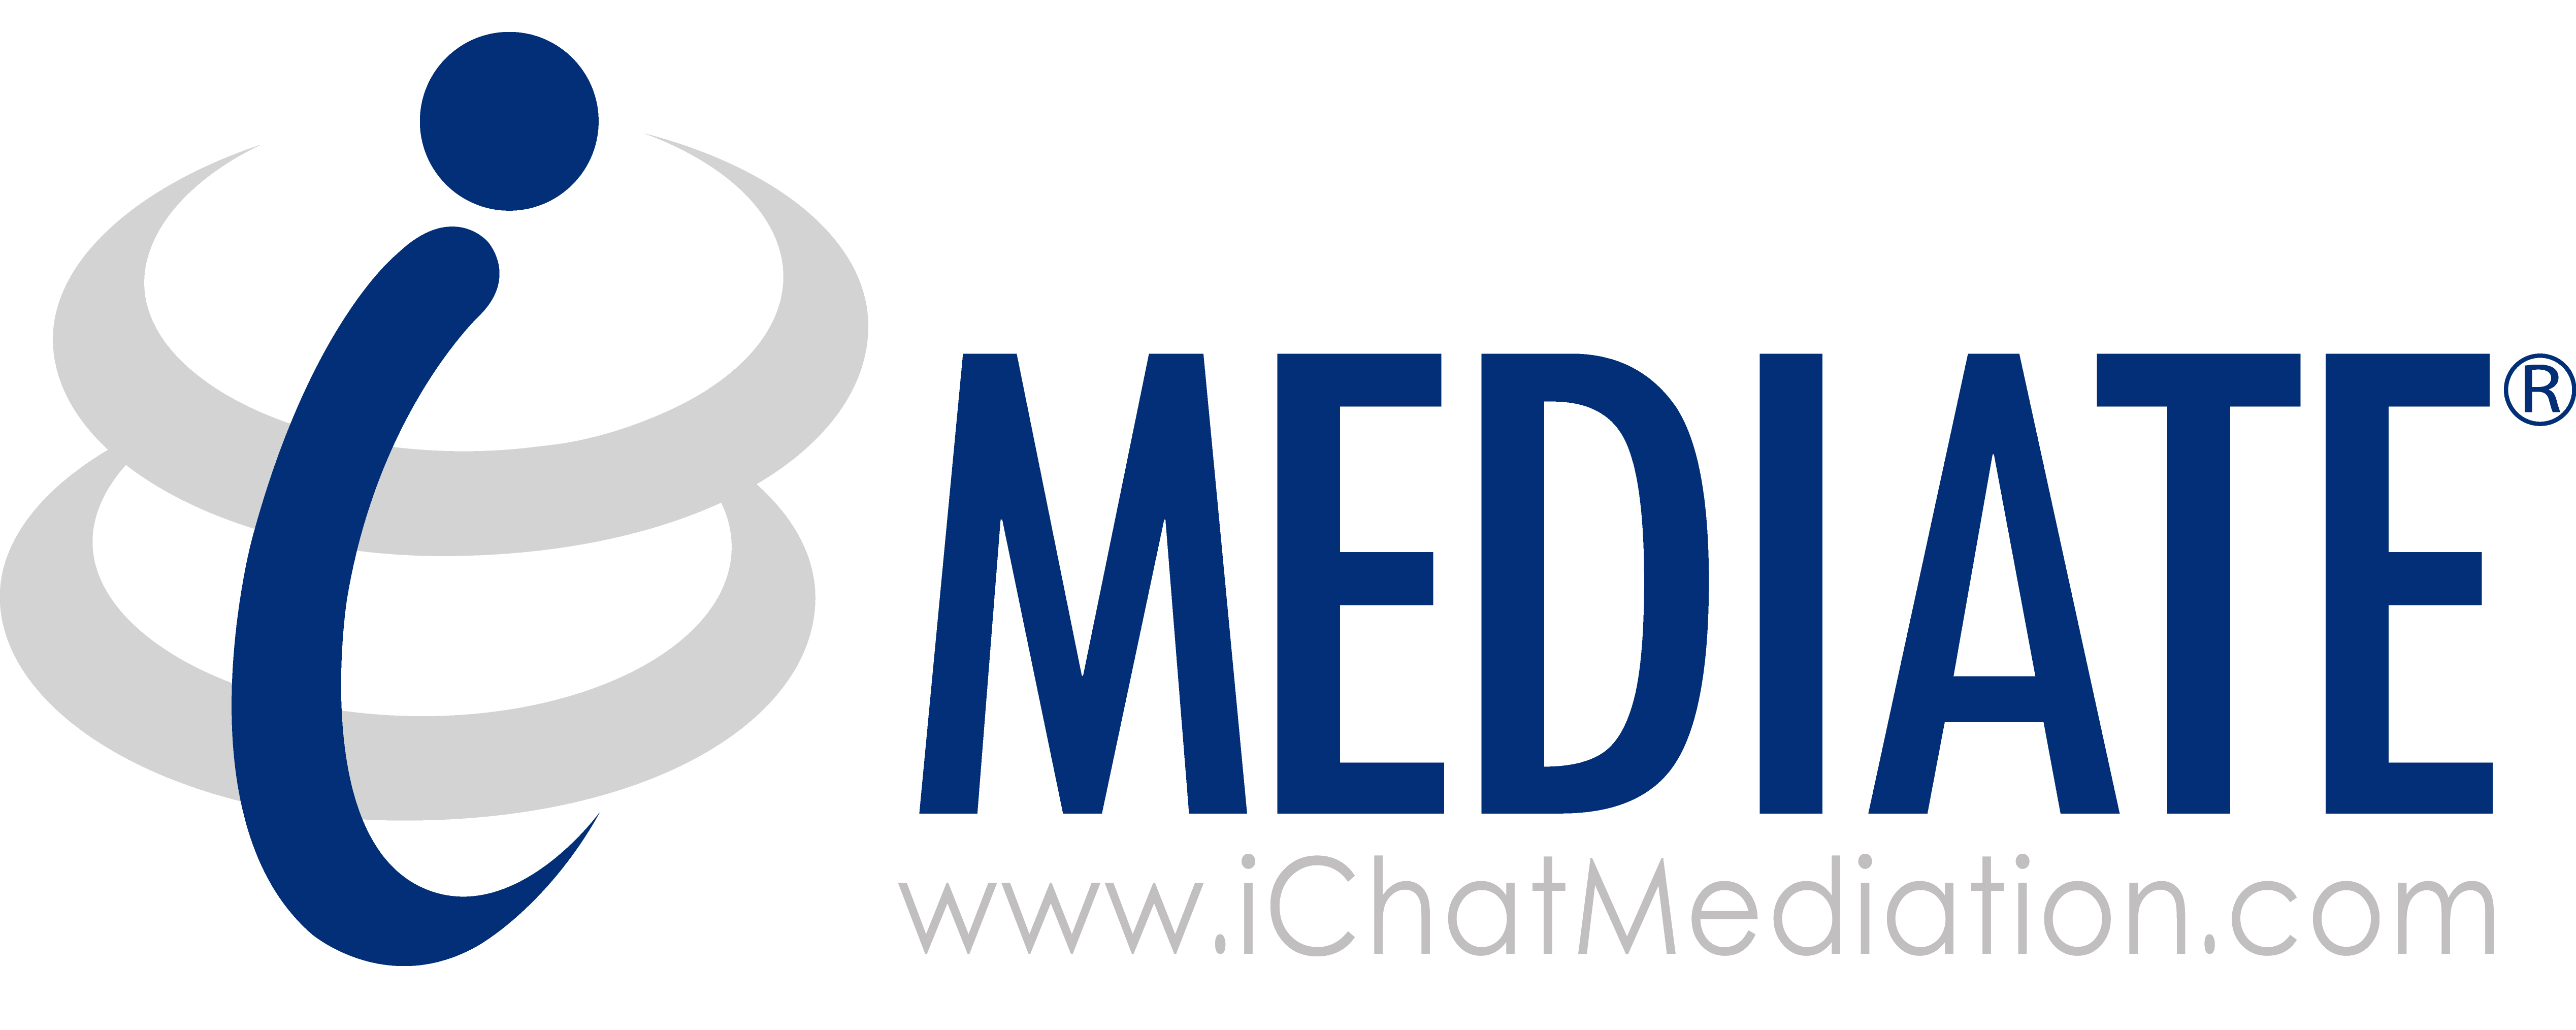 iMediate Inc. - iChatMediation'